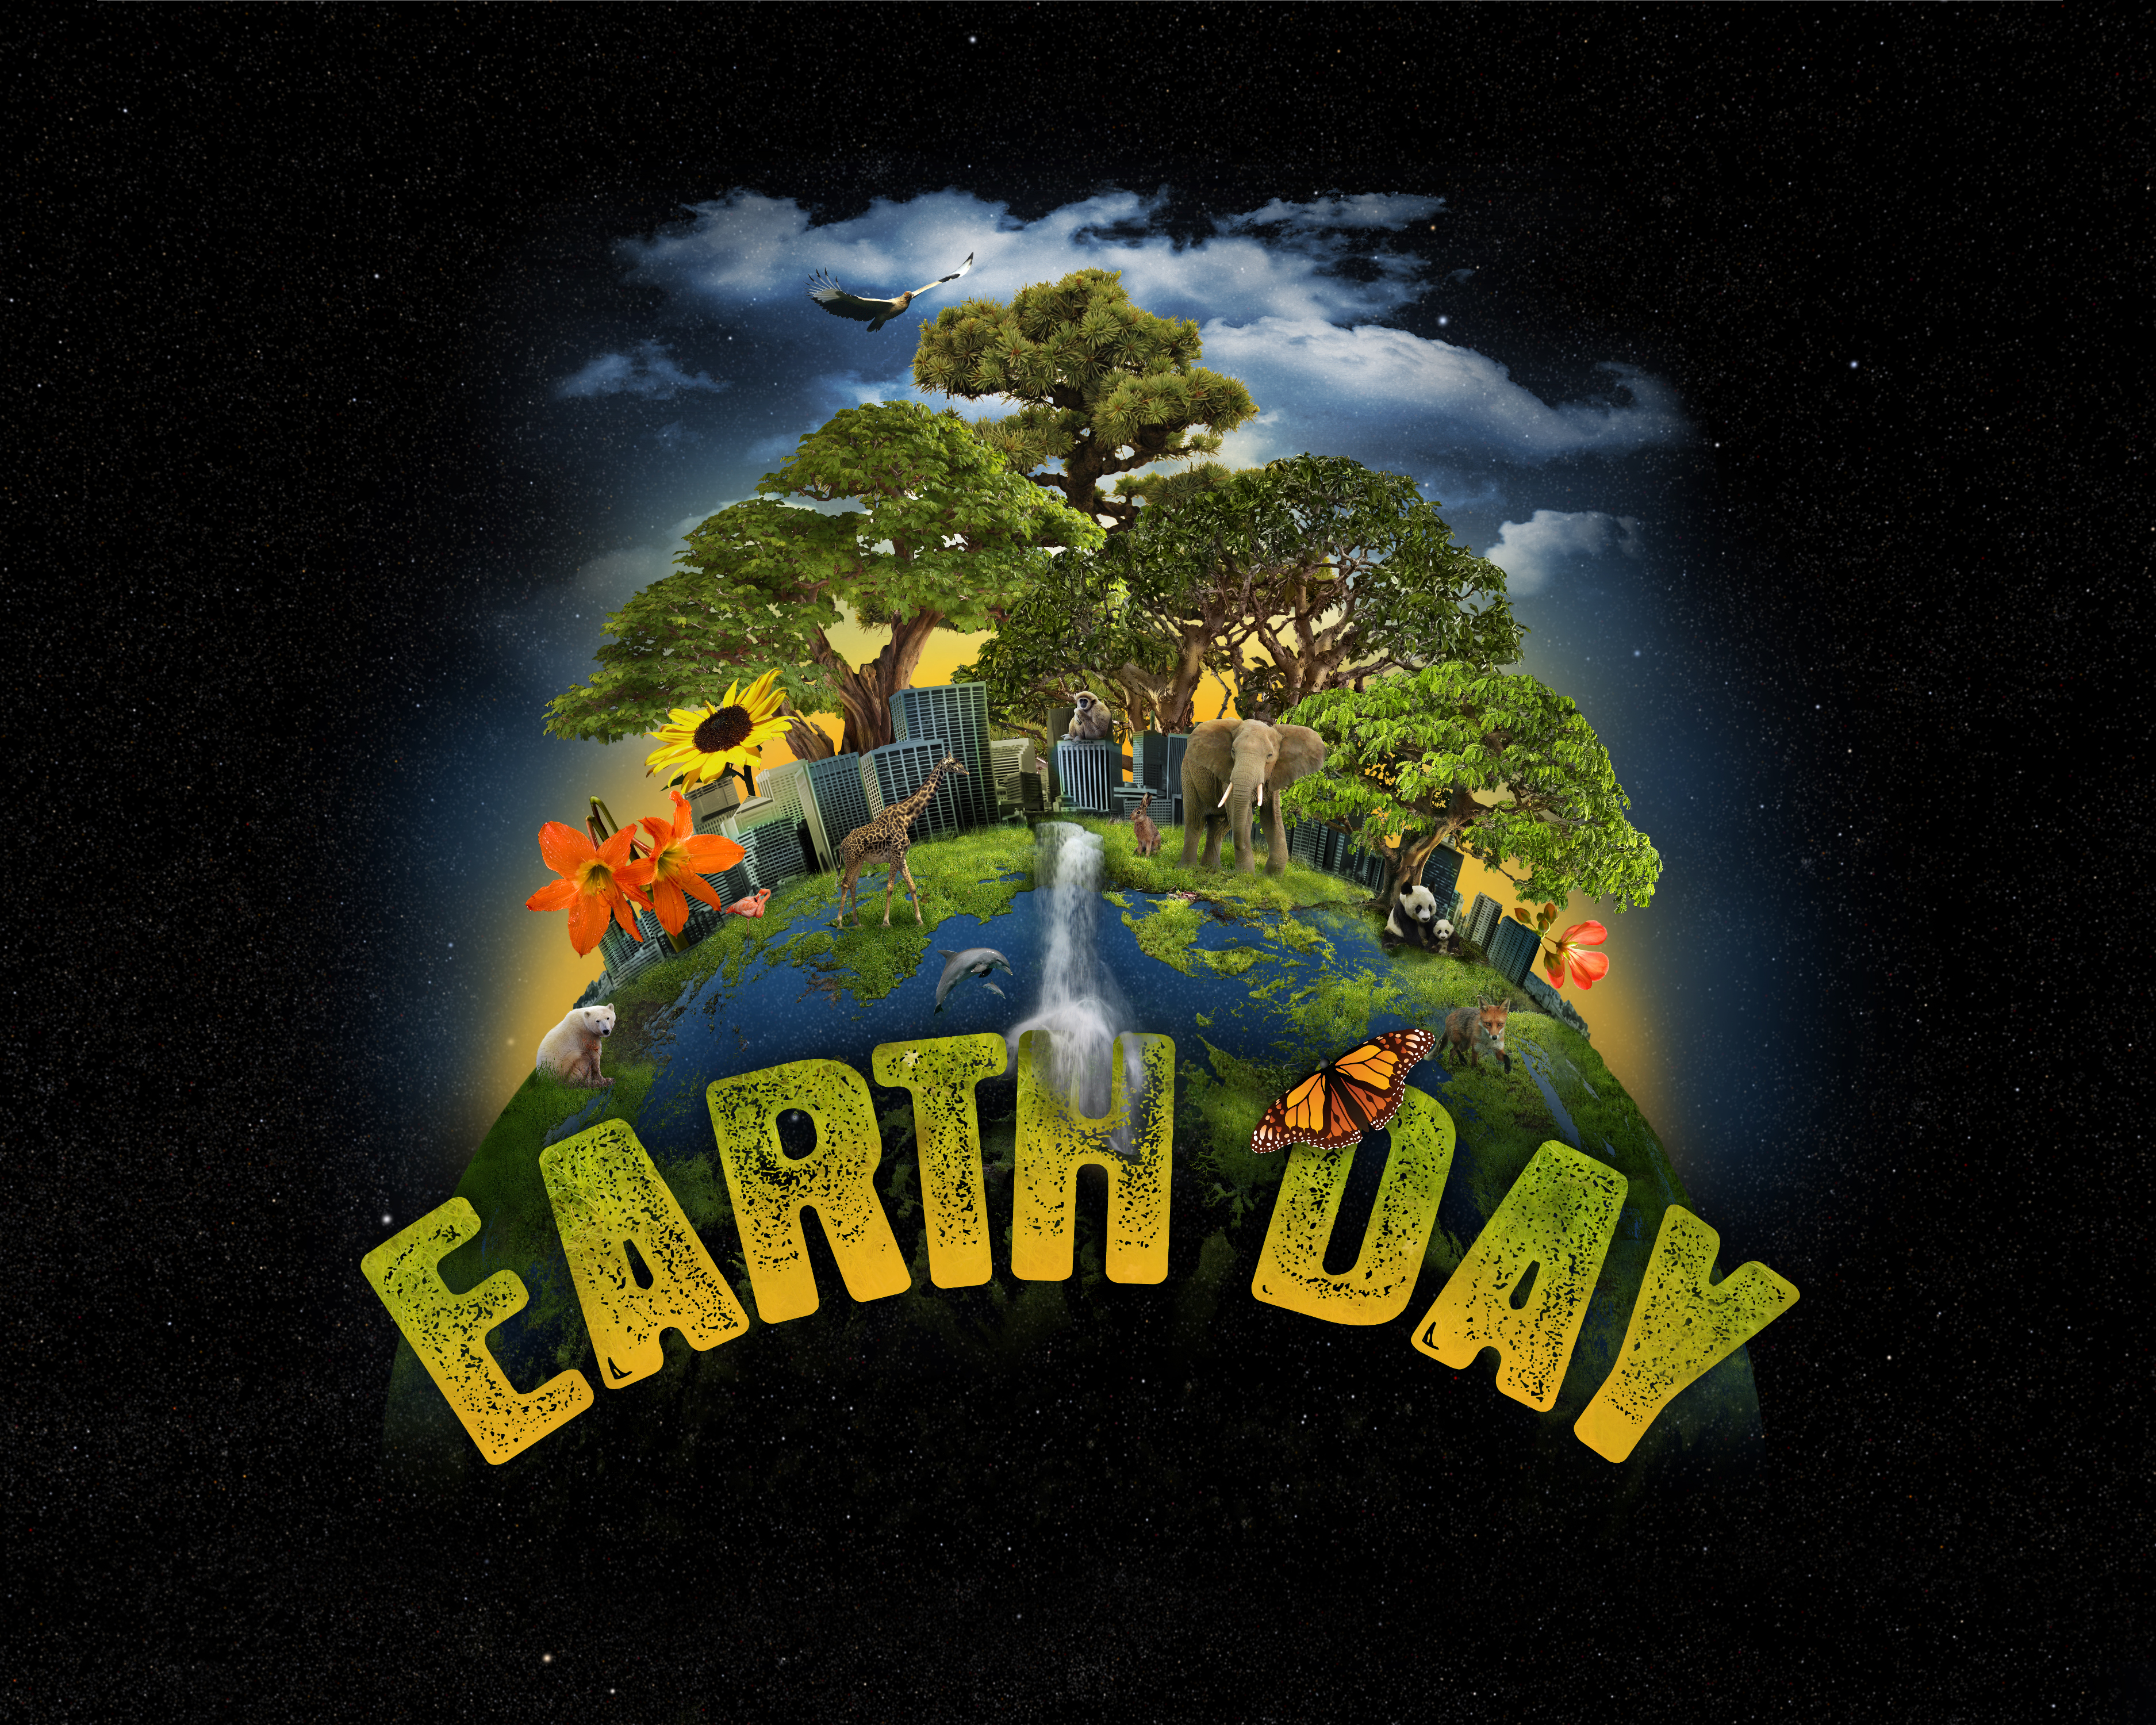 Earth Day HD Wallpaper